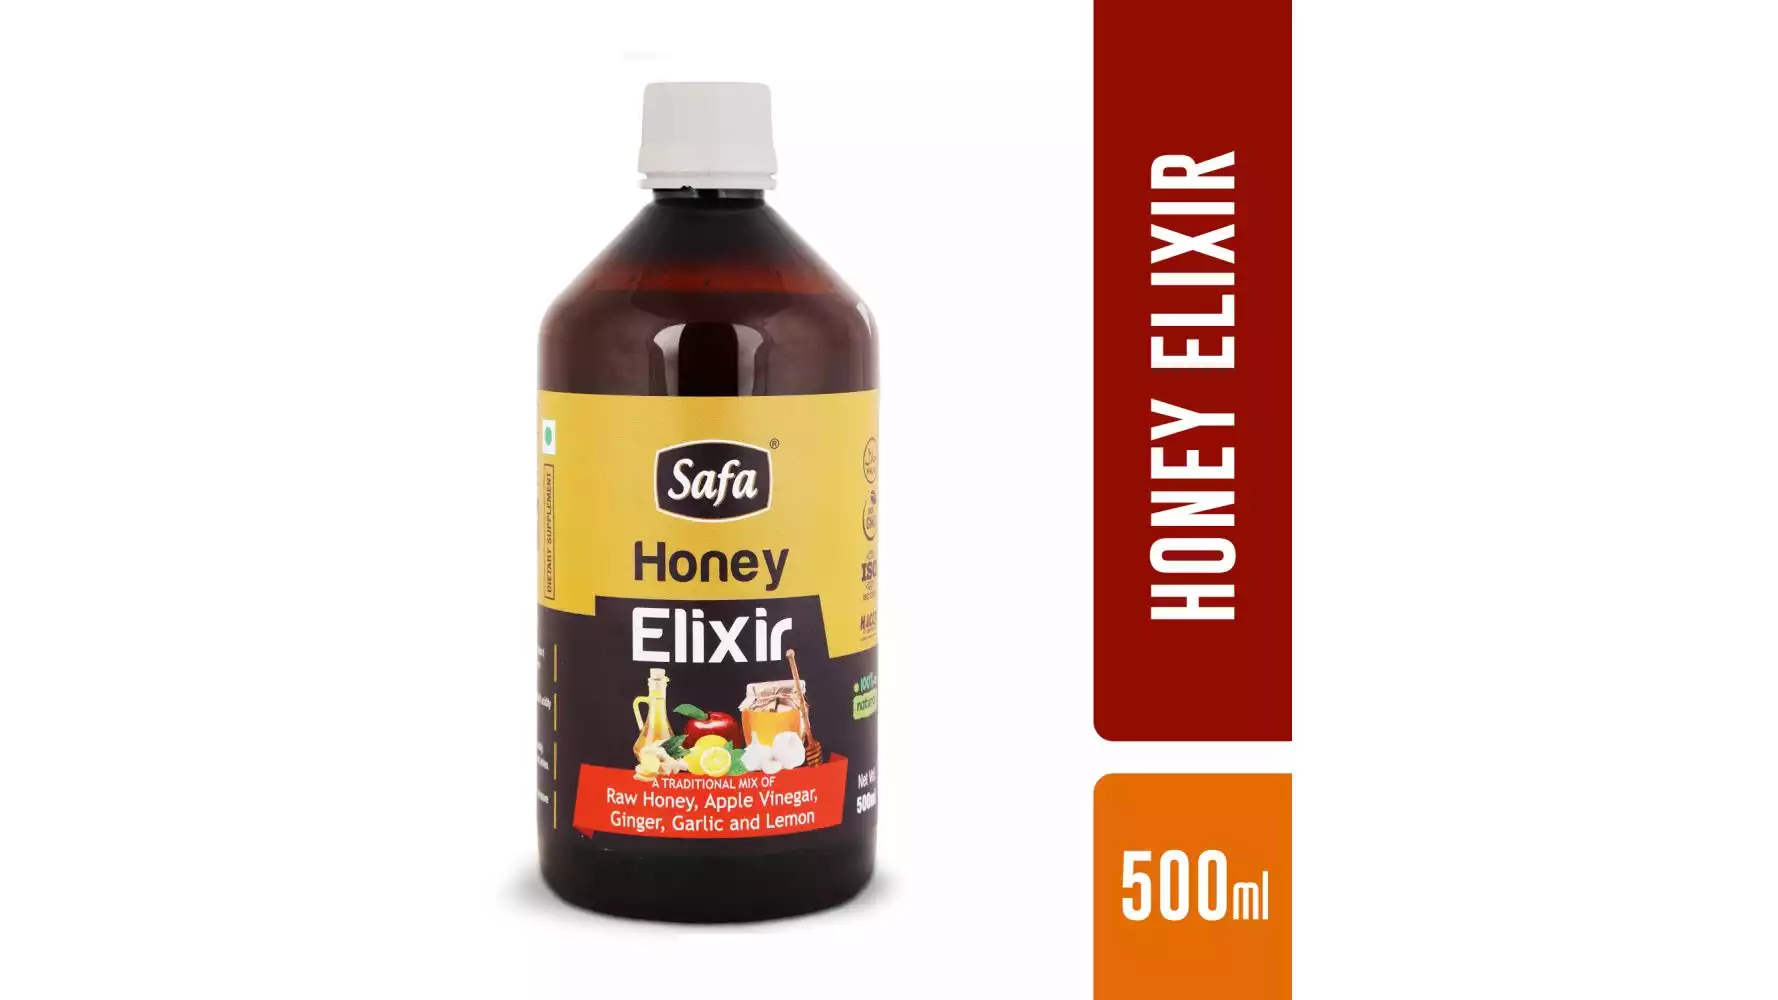 Safa Honey Elixir (500ml)